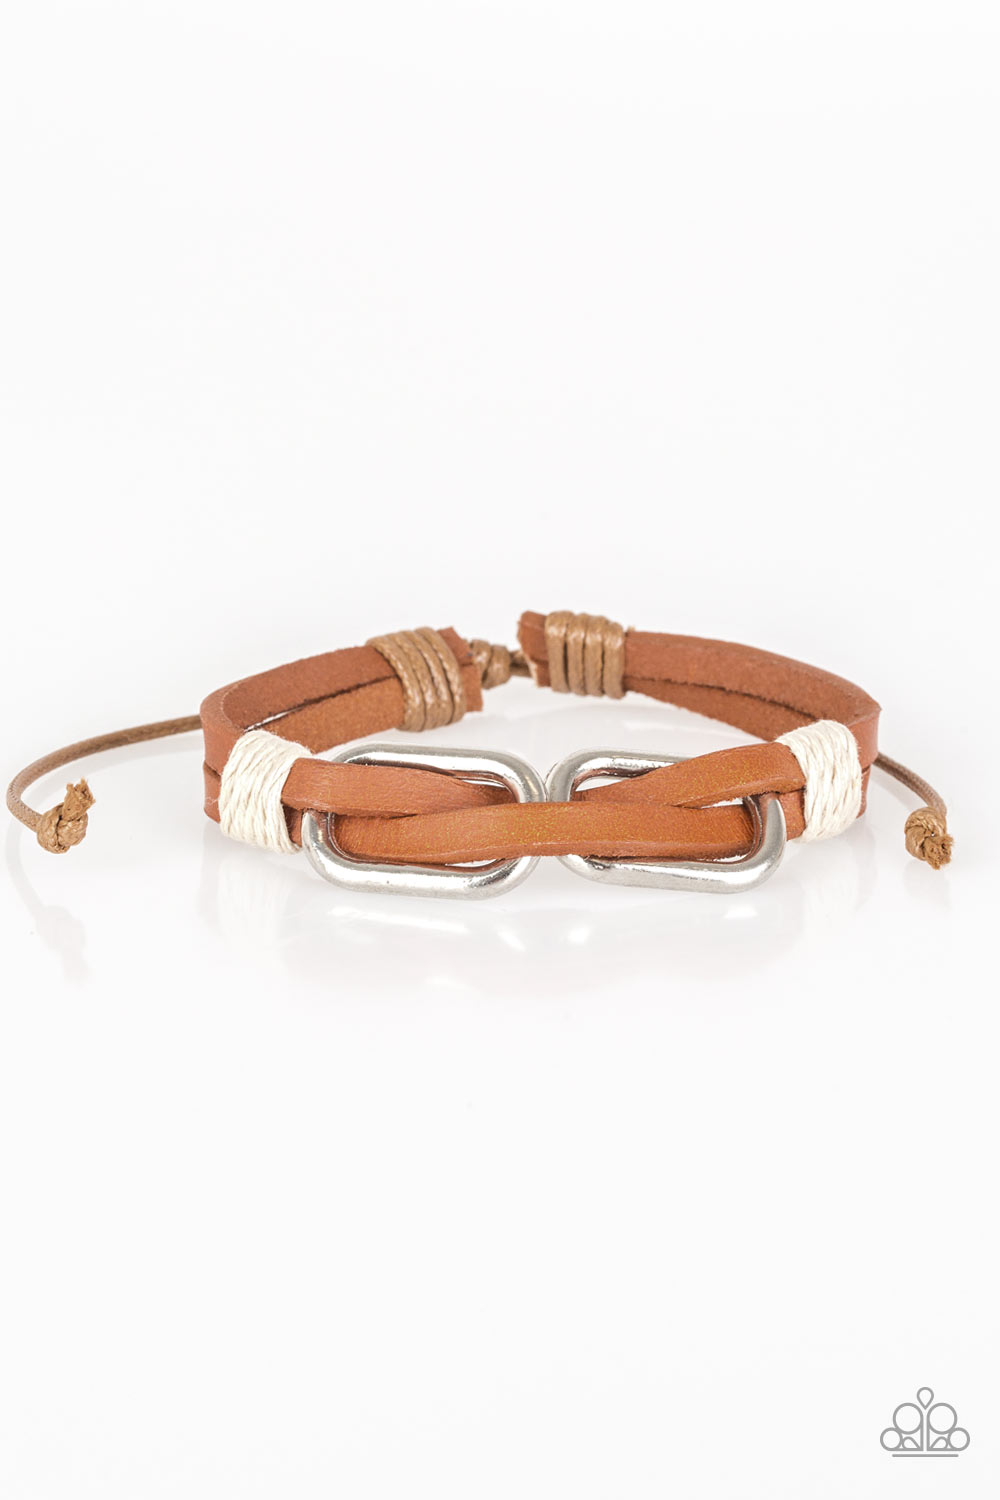 Paparazzi MOUNTAINEER Time Zone - White Cording - Leather Bracelet - $5 Jewelry With Ashley Swint